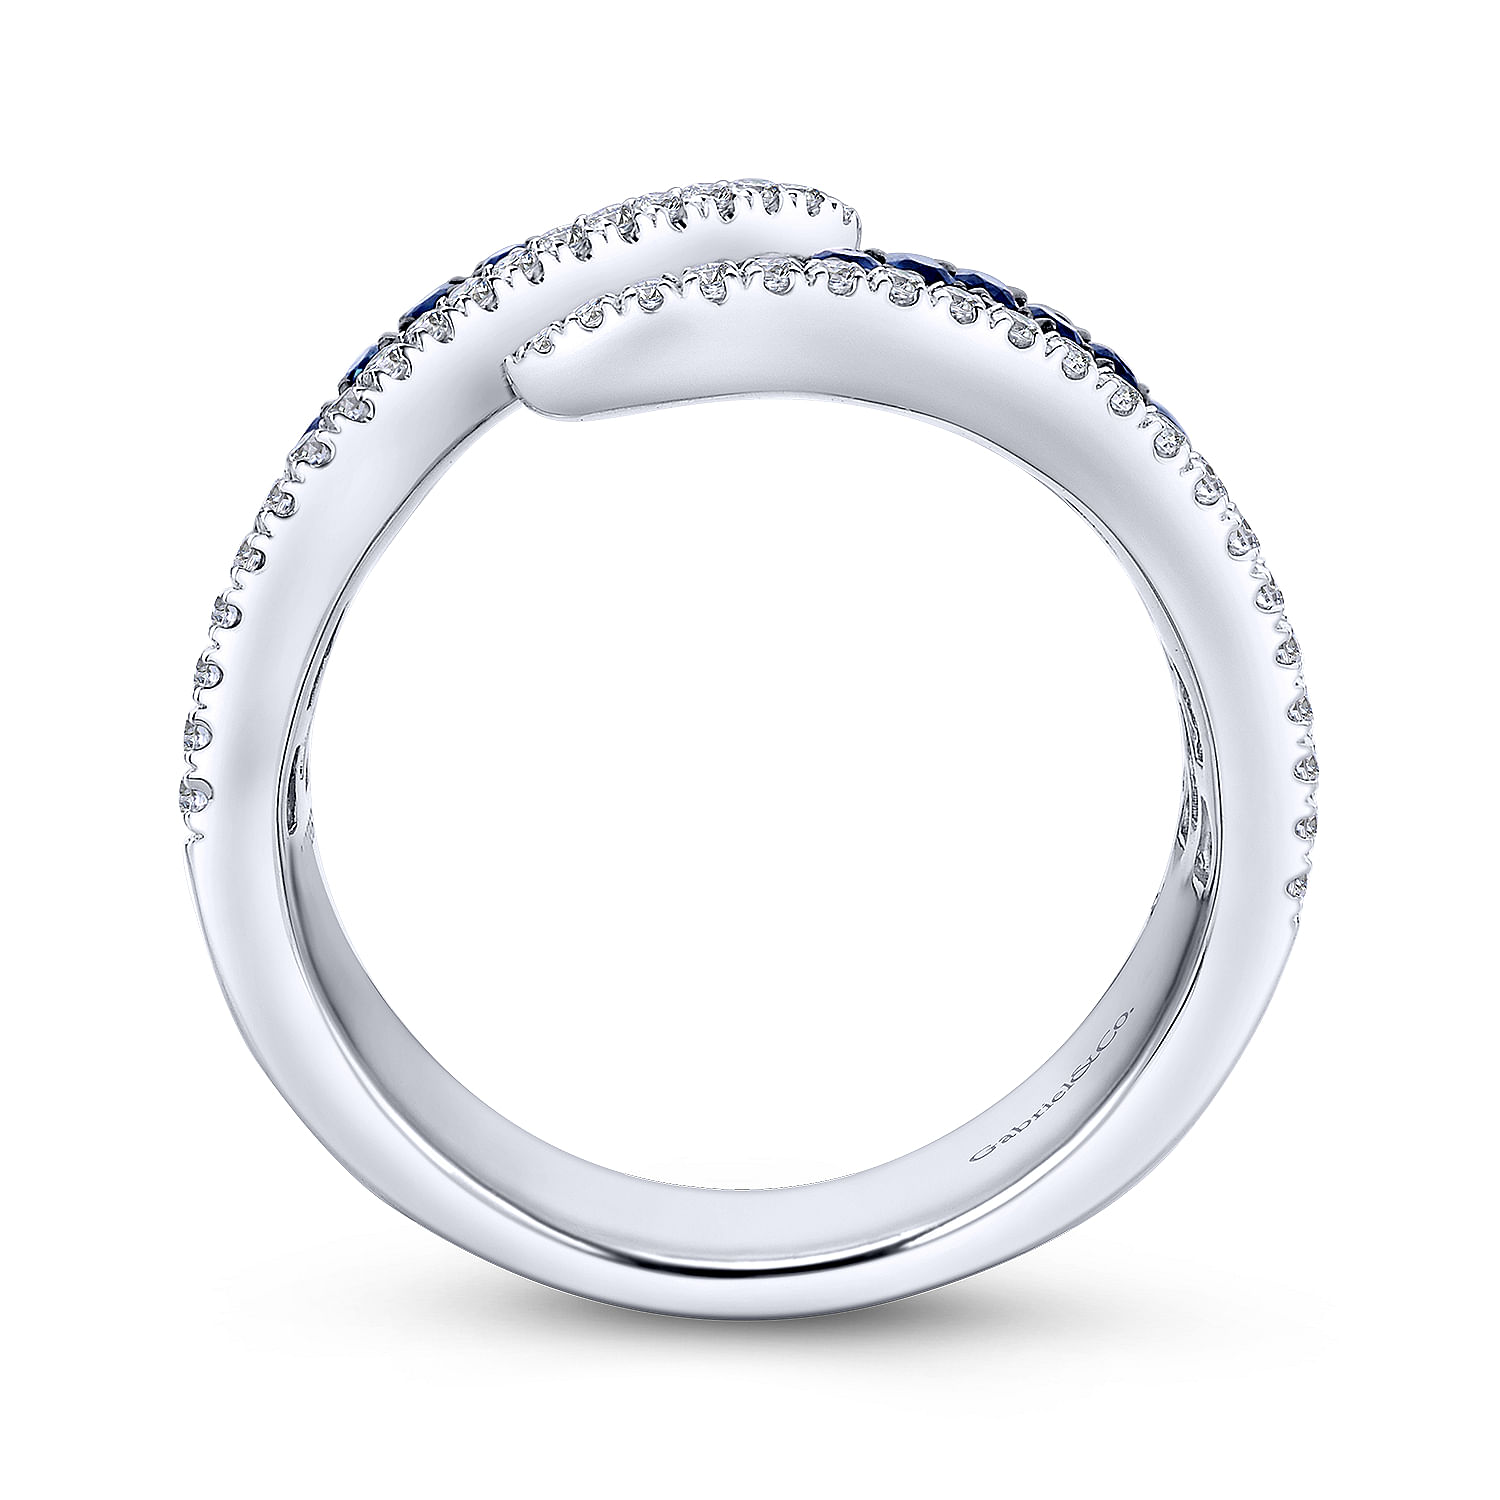 14K White Gold Sapphire and Diamond Pavé Open Ring